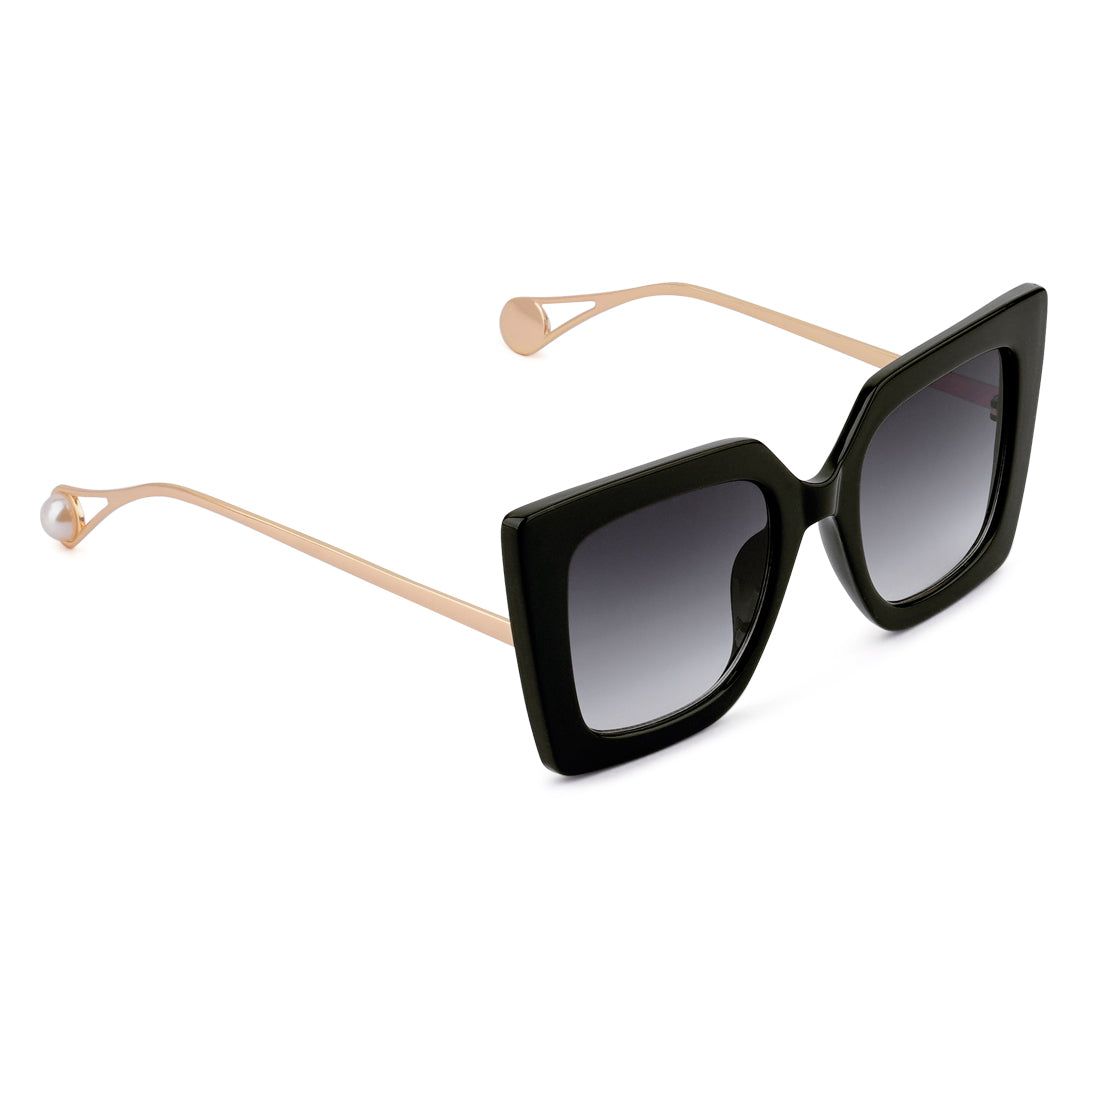 Stare Game Square Frame Oversized Sunglasses In Black